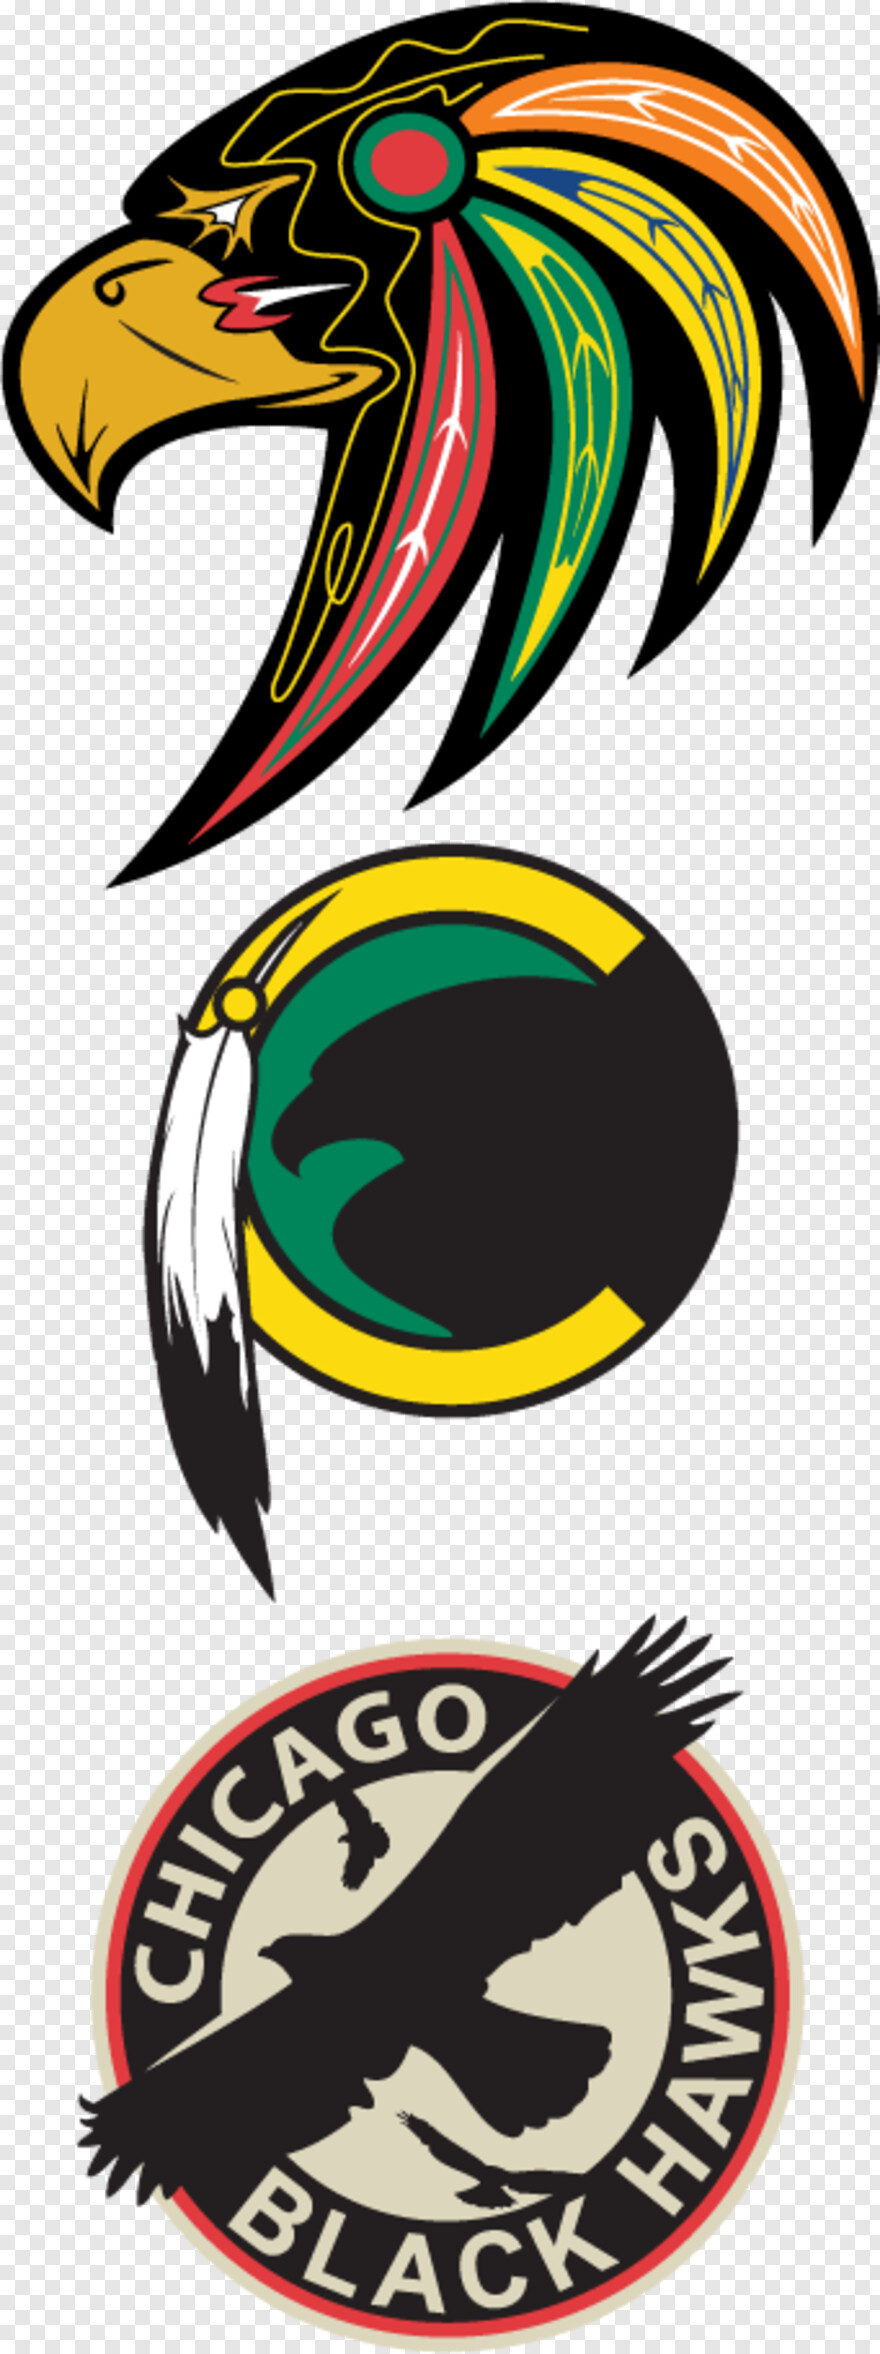 blackhawks-logo # 531875